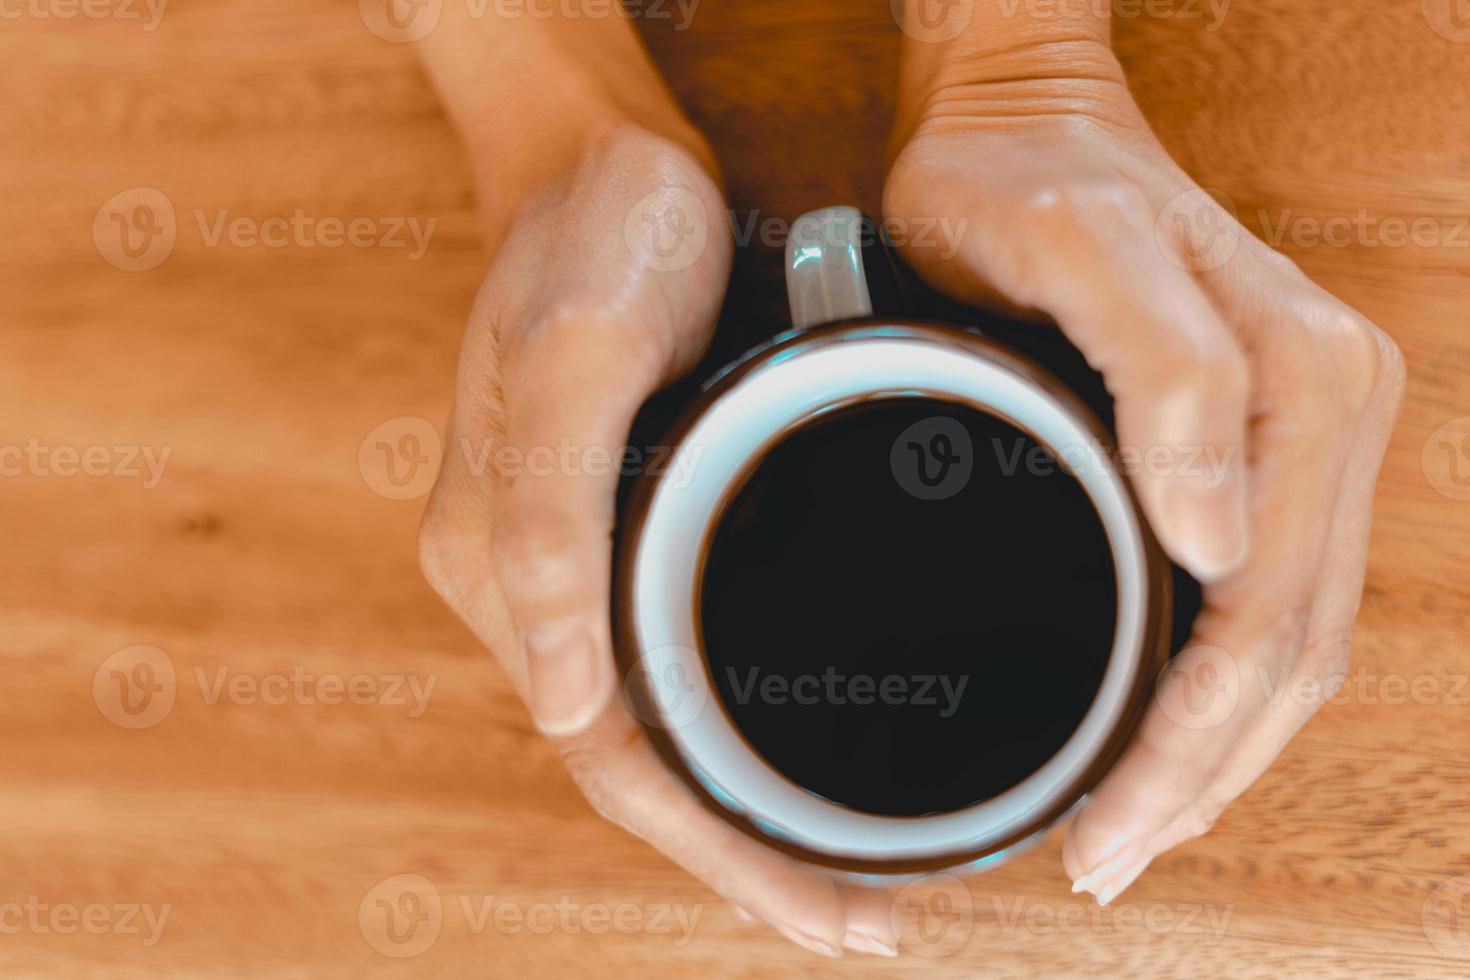 kopje gebrouwen zwarte koffie op de houten tafel foto